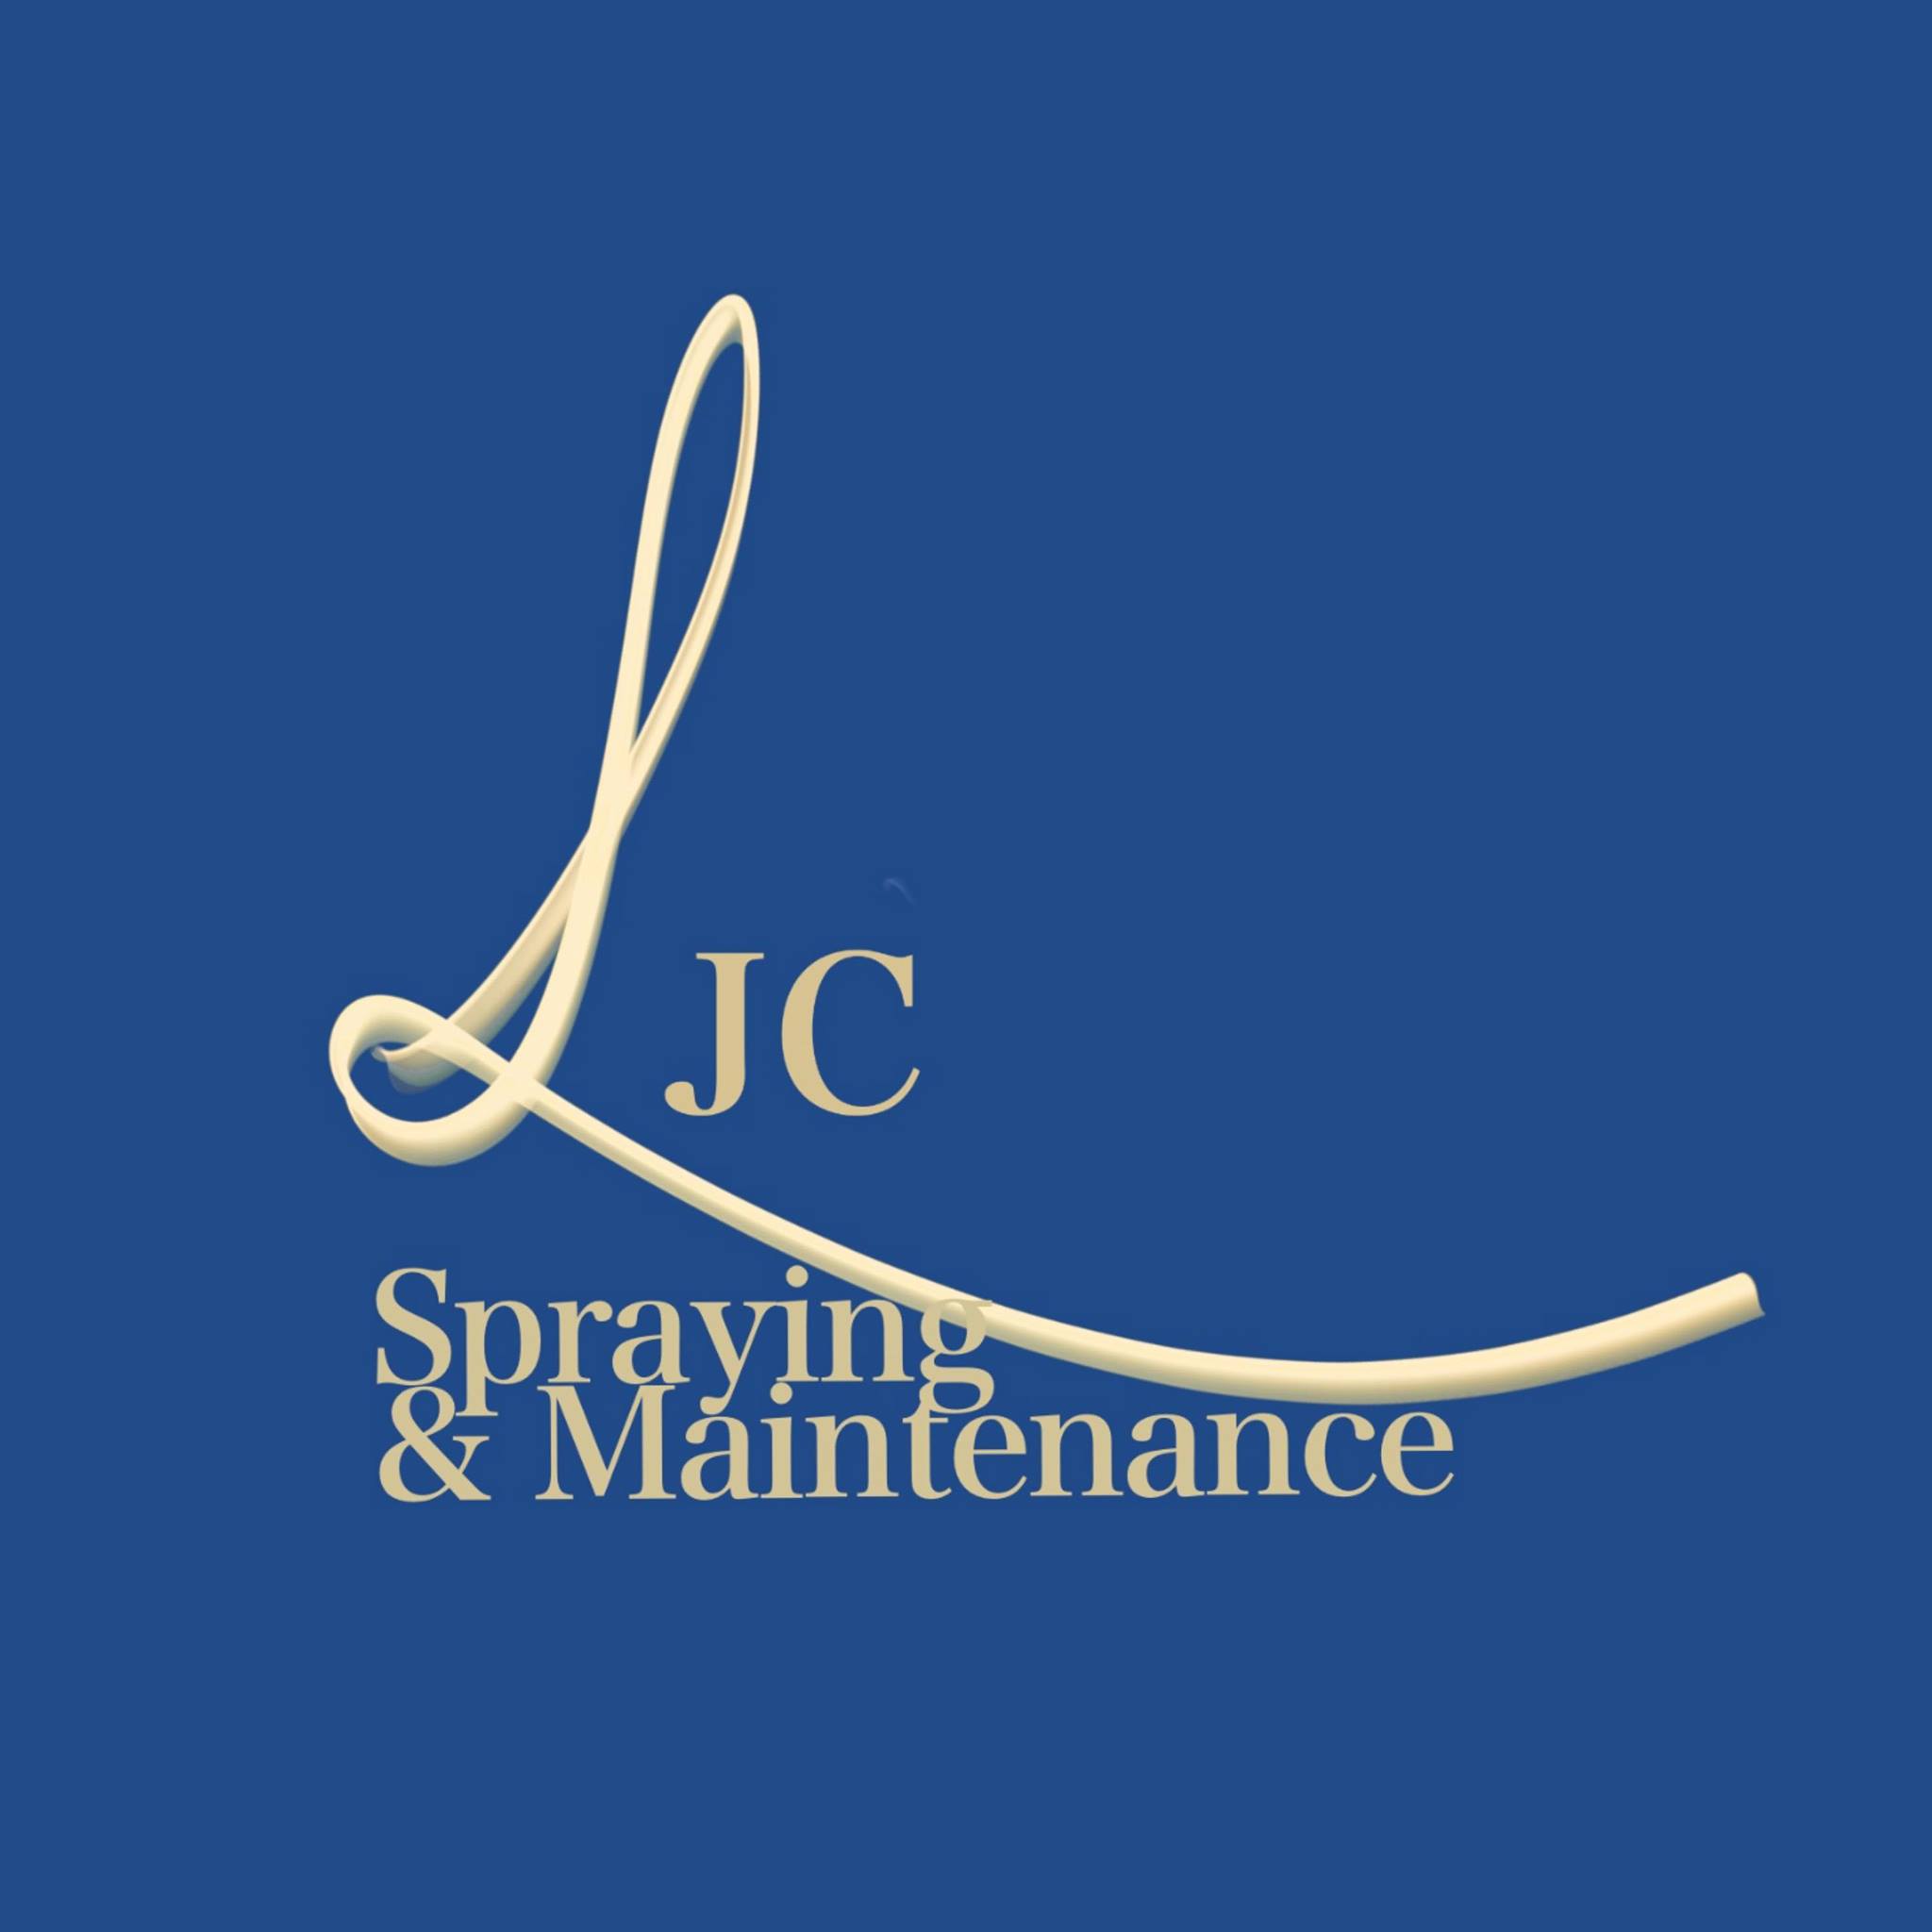 LJC Spraying and Maintenance